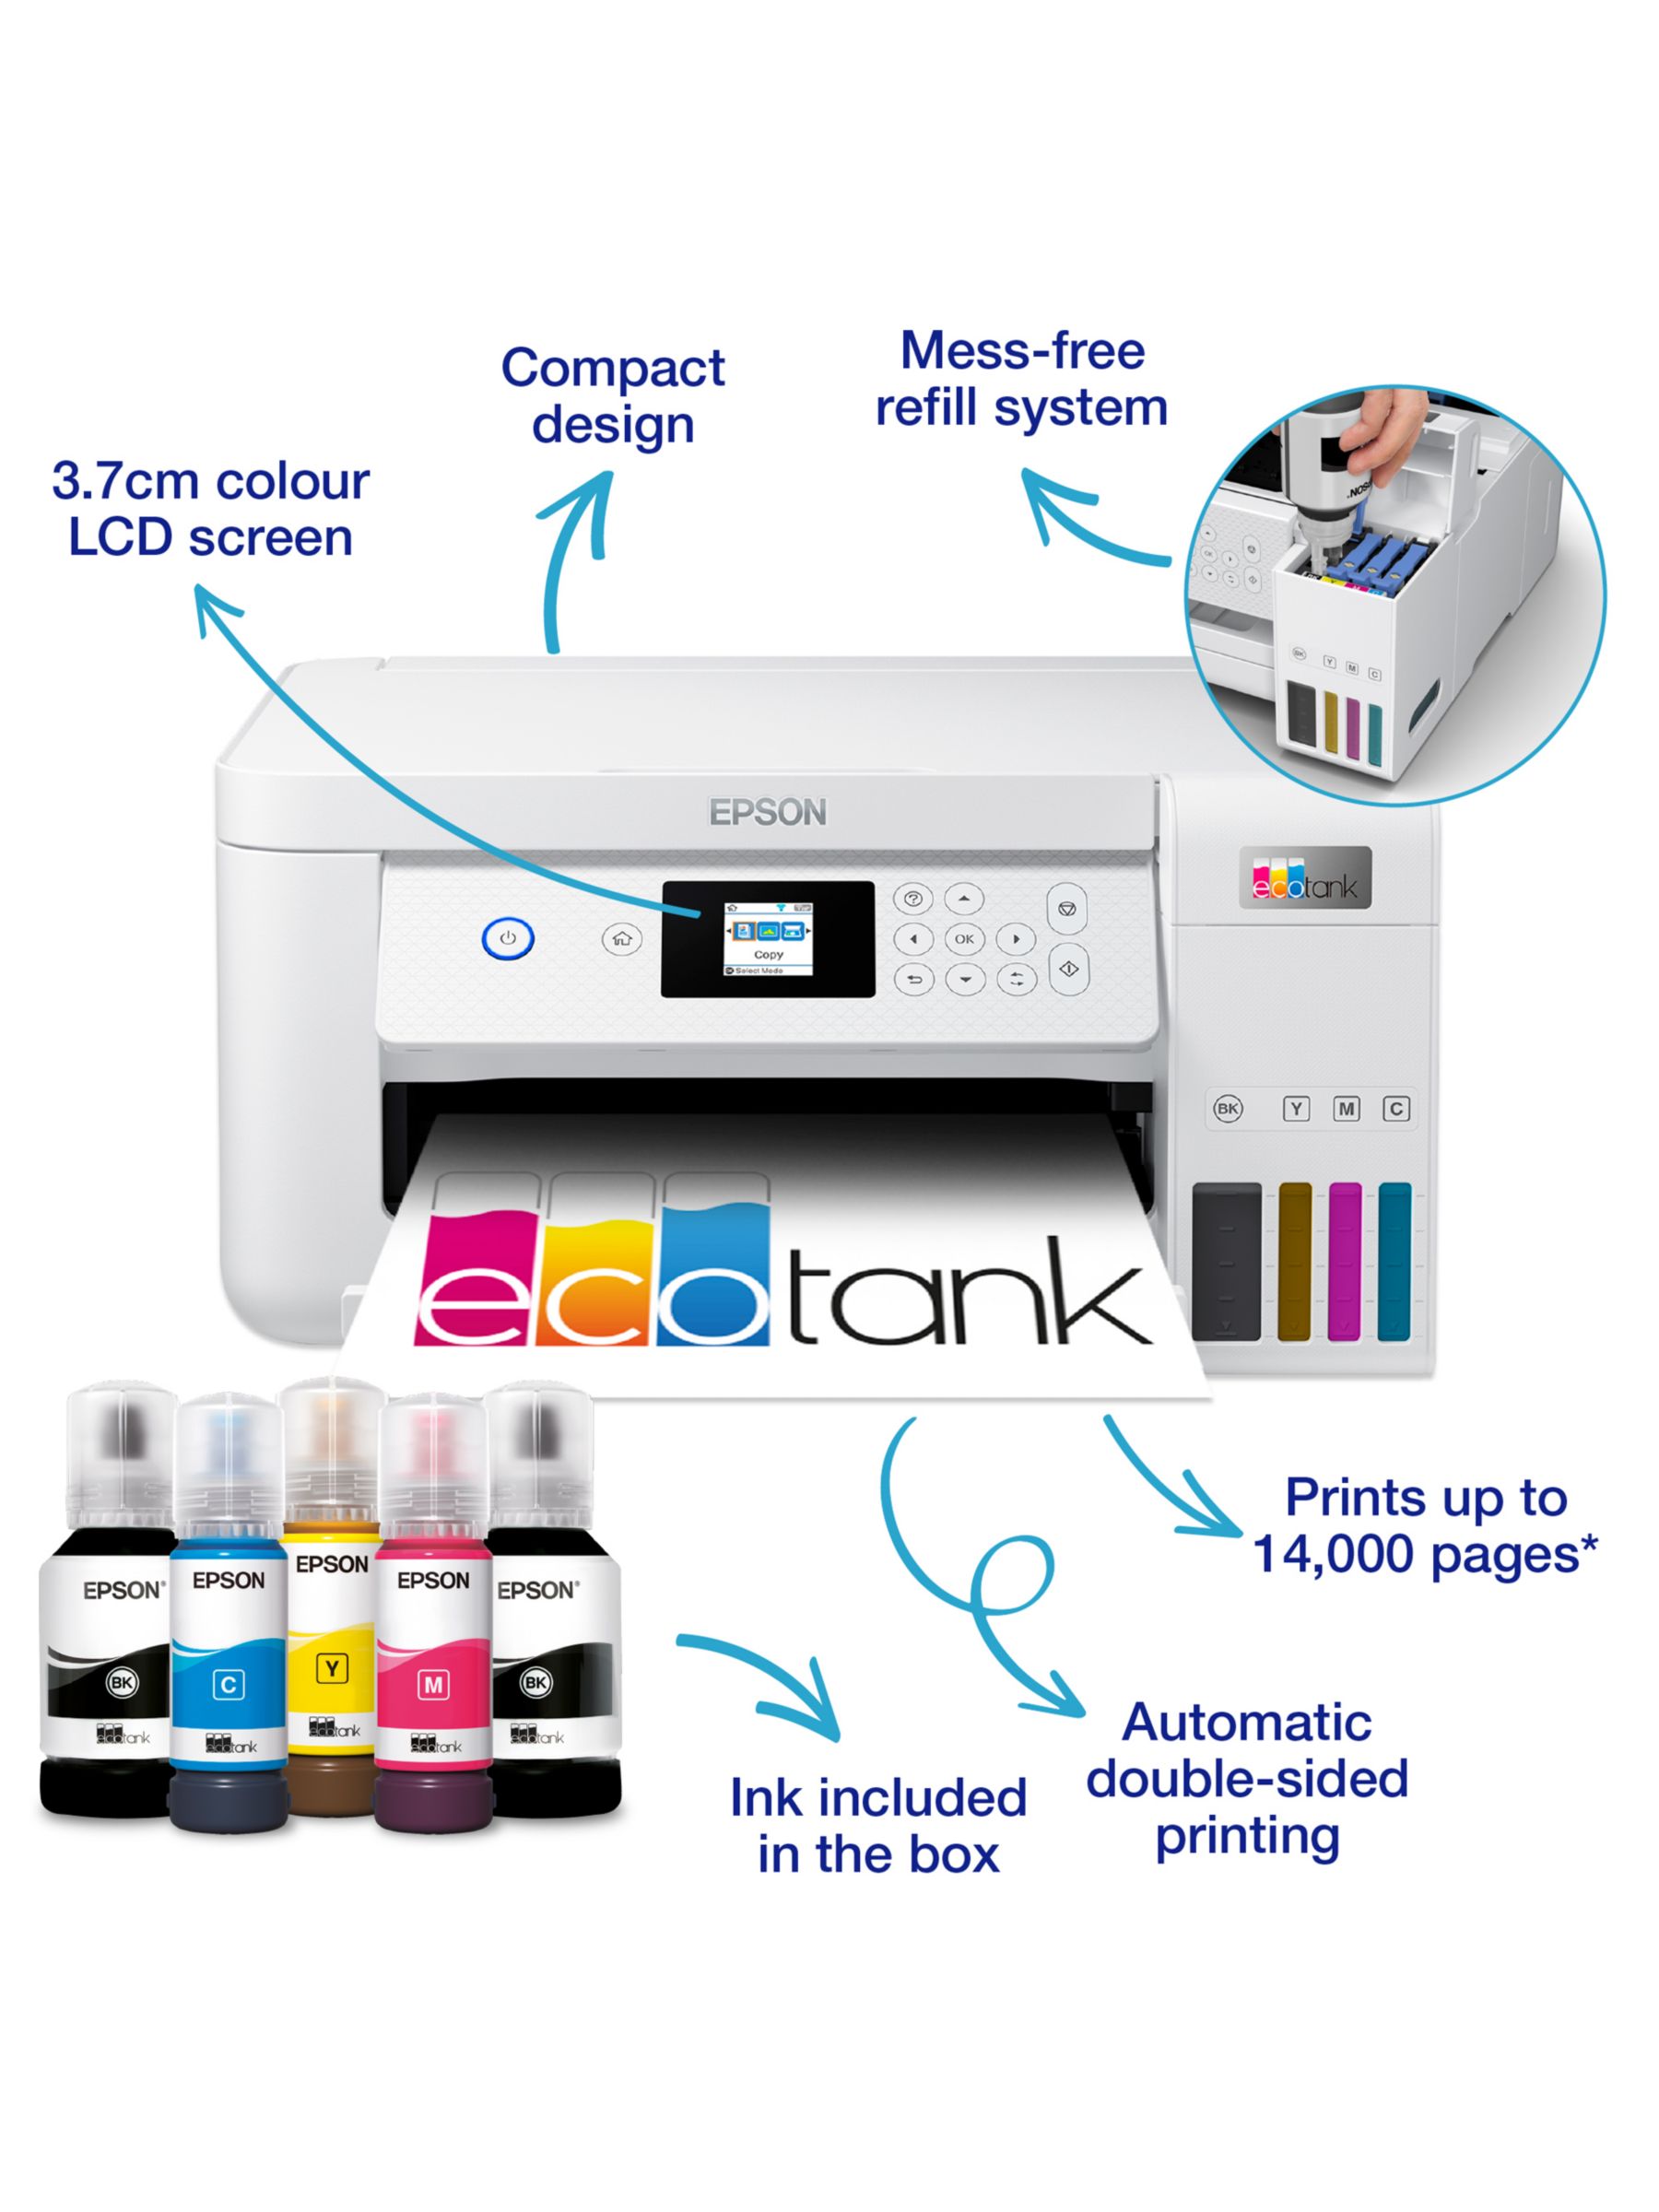 Epson EcoTank ET-2856 Print/Scan/Copy Wi-Fi Ink Tank Printer, With